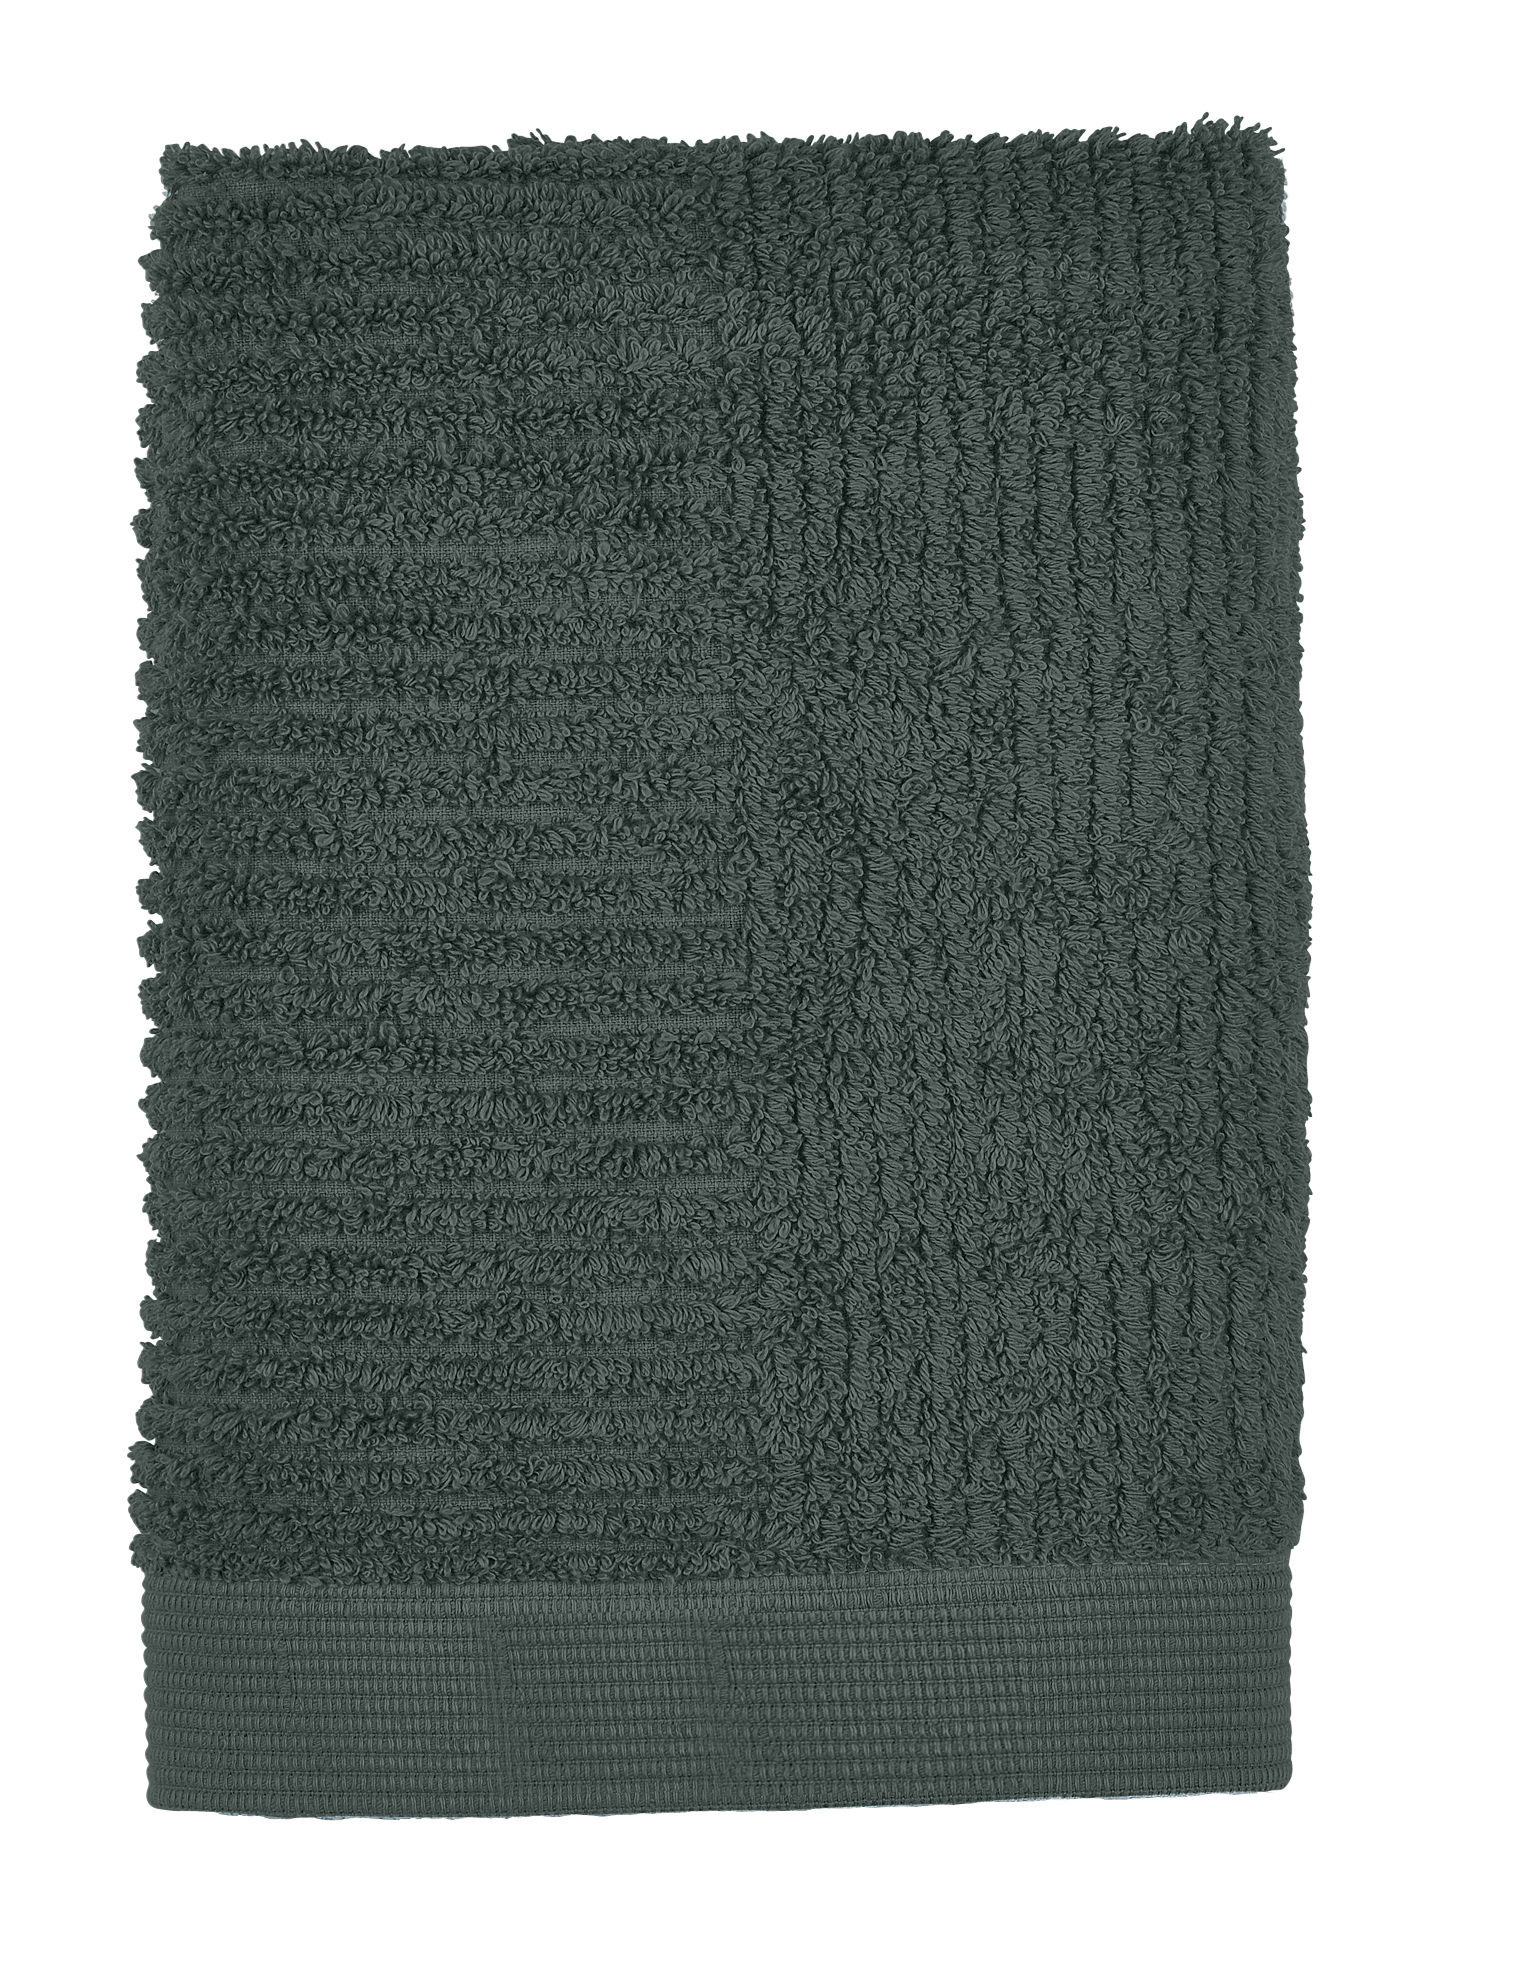 Zone - Classic Towel 50 x 70 cm - Pine Green (330336)